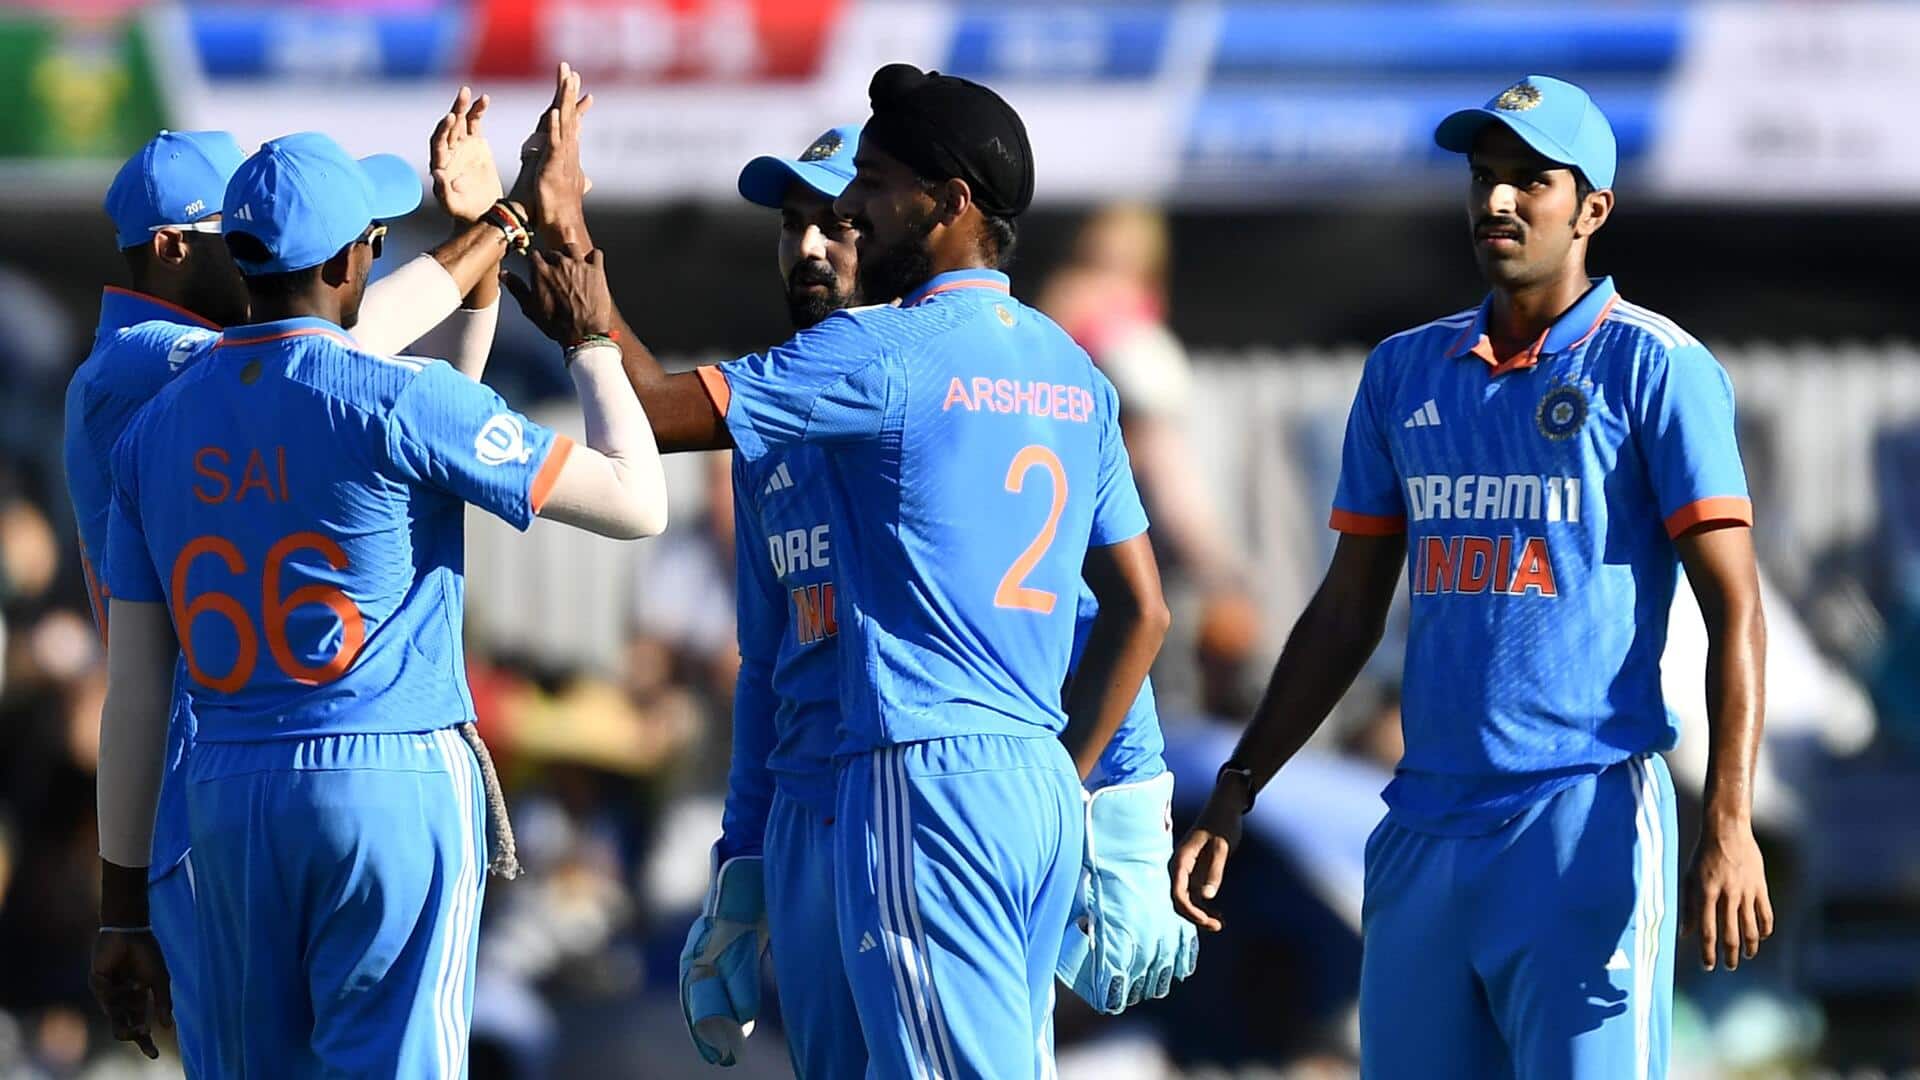 Arshdeep Singh claims 4/30 versus SA in 3rd ODI: Stats